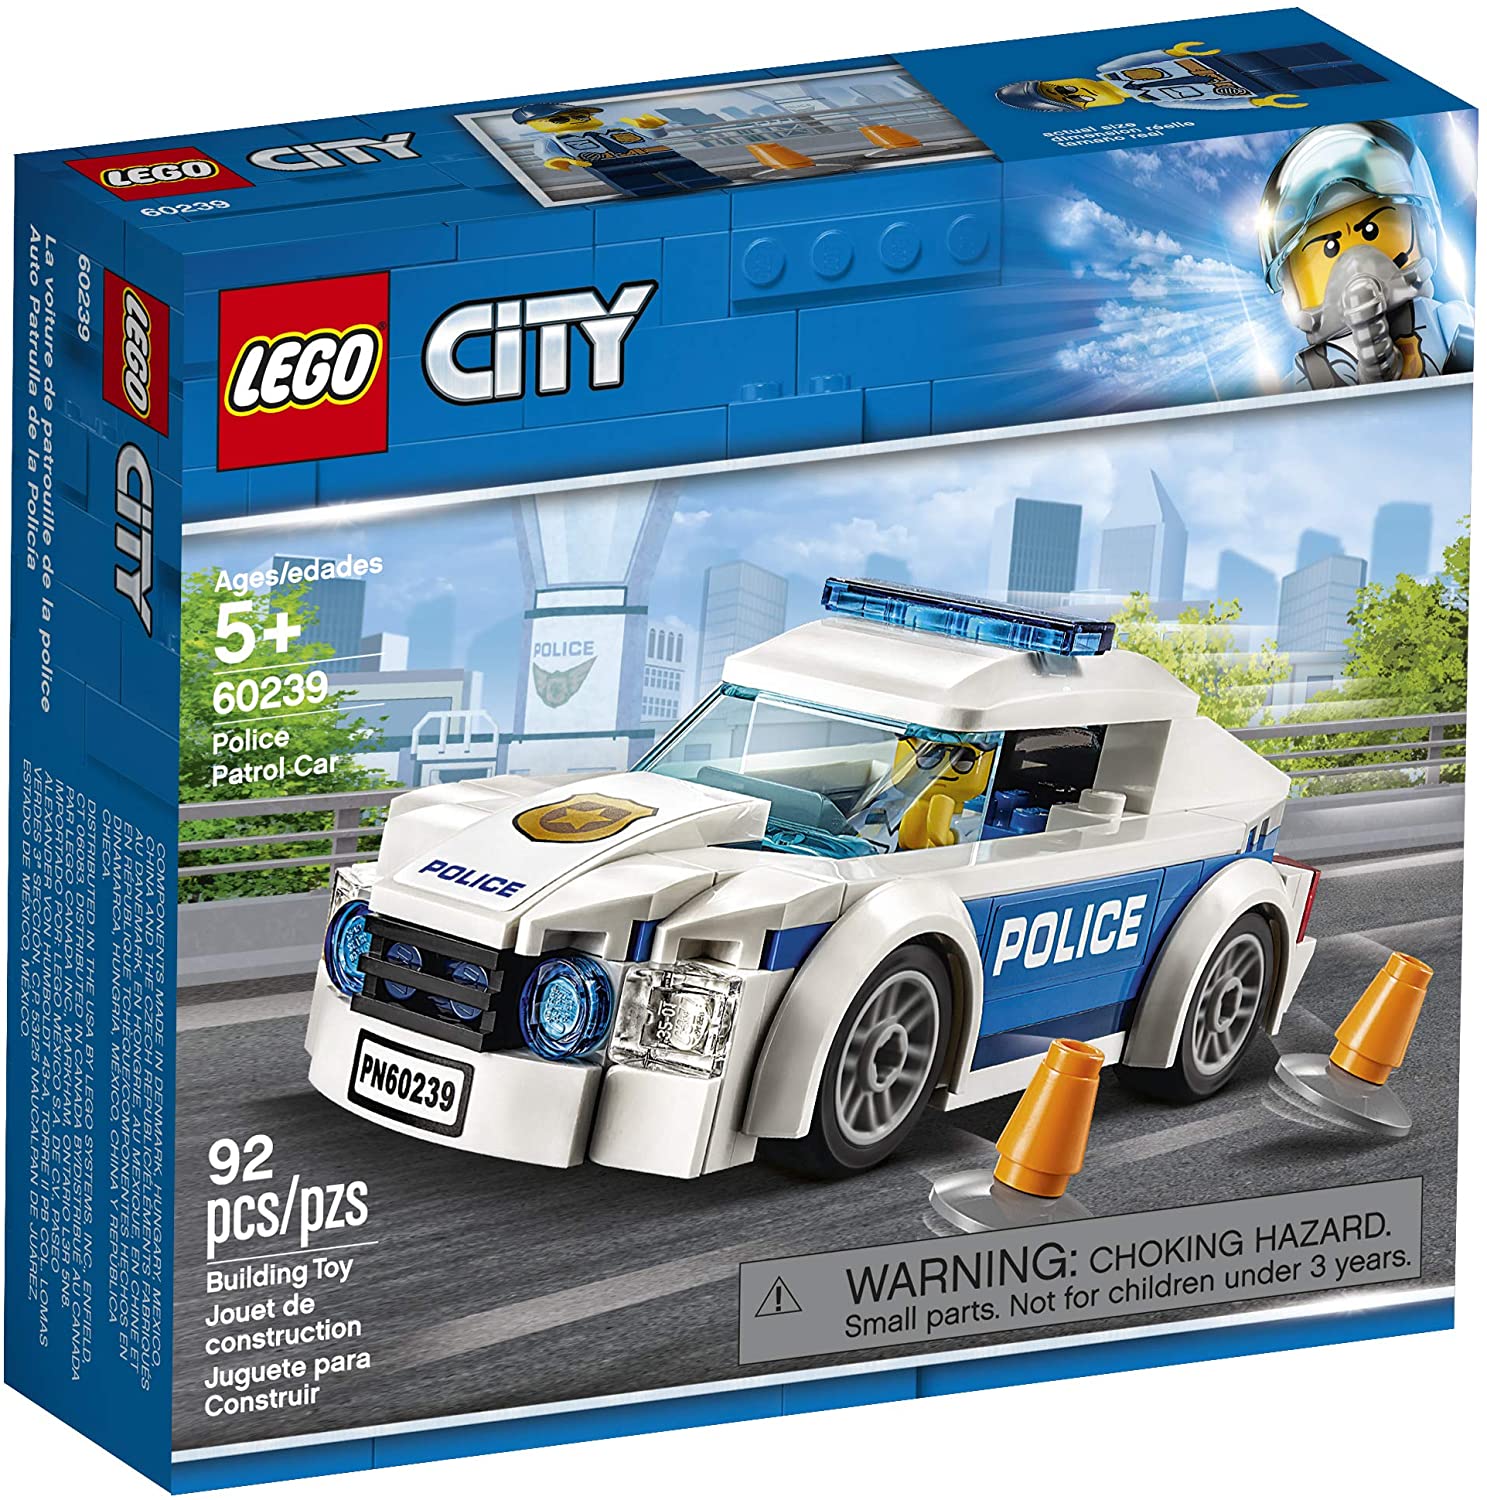 LEGO City Police Patrol Car 60239 Building Kit (92 Pieces) – All Toys